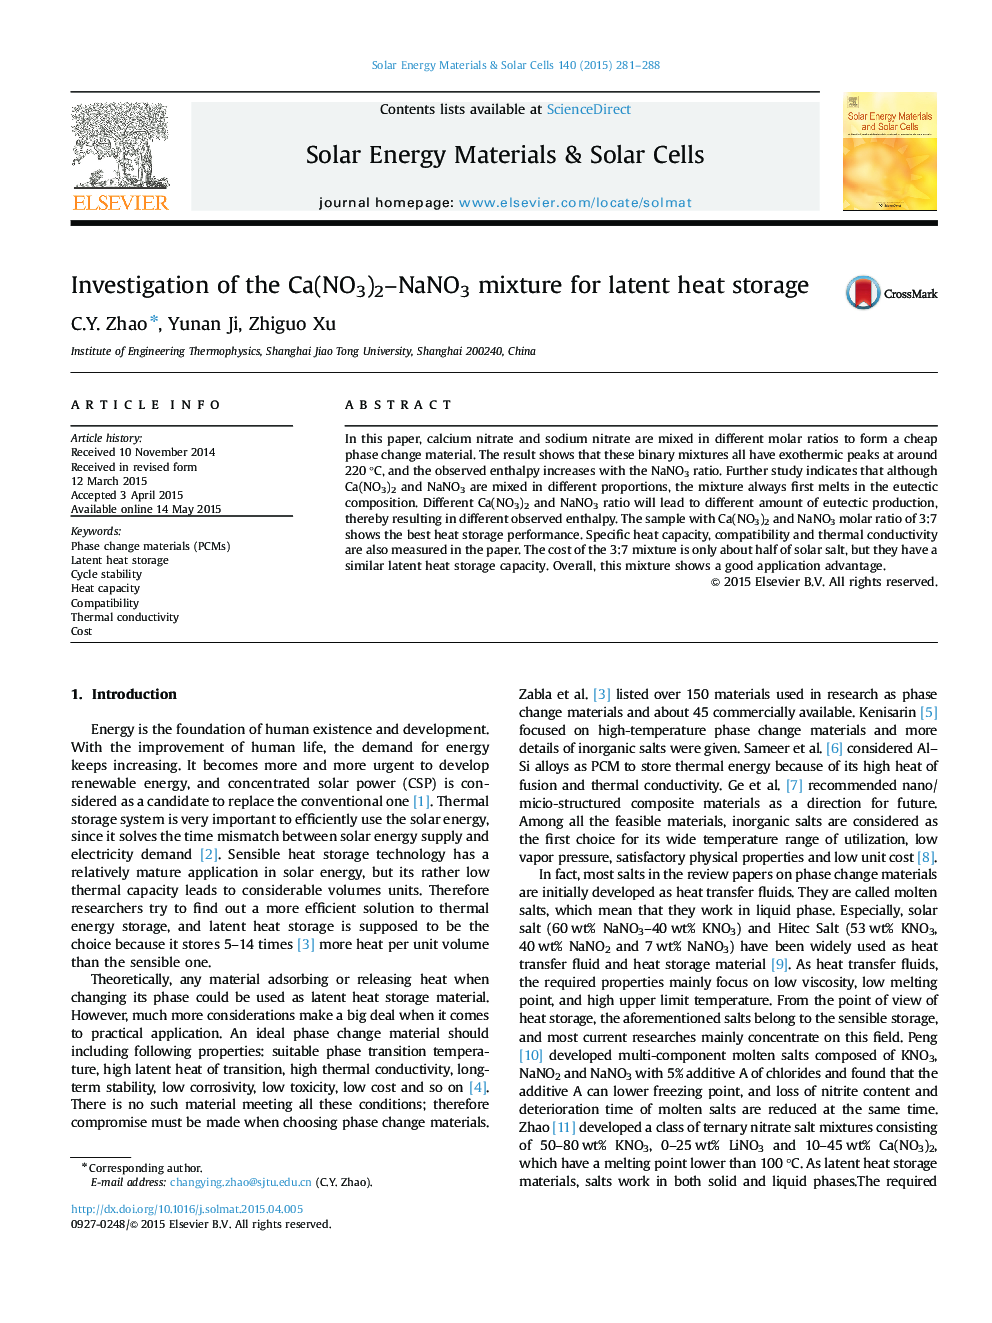 Investigation of the Ca(NO3)2-NaNO3 mixture for latent heat storage